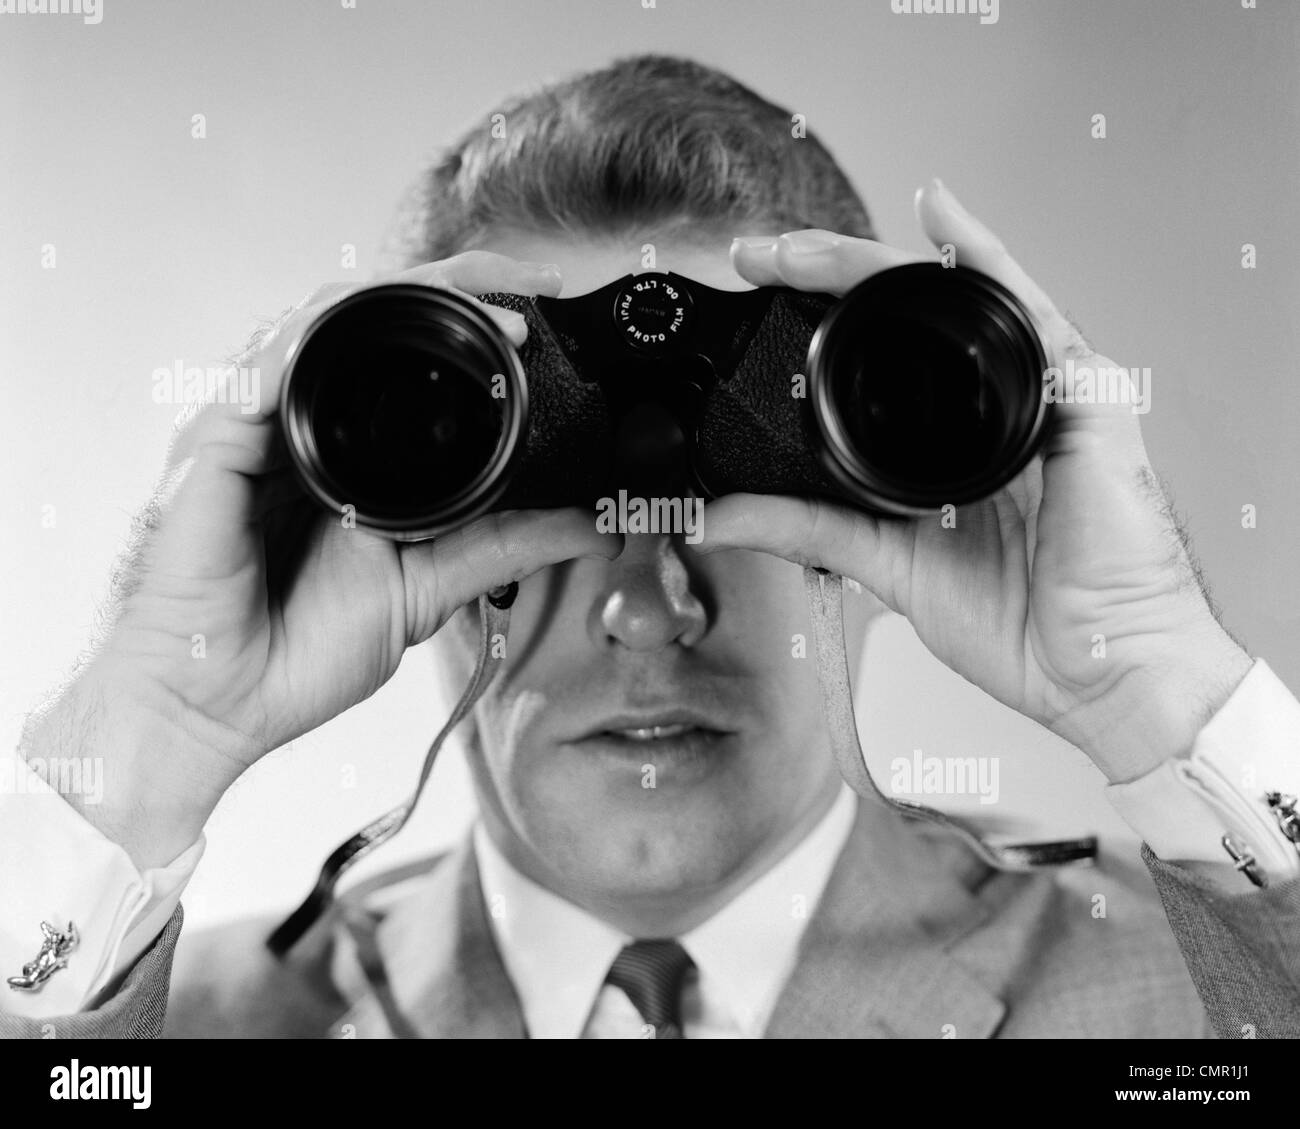 1960s HEAD-ON CLOSE-UP OF MAN LOOKING THROUGH BINOCULARS Stock Photo